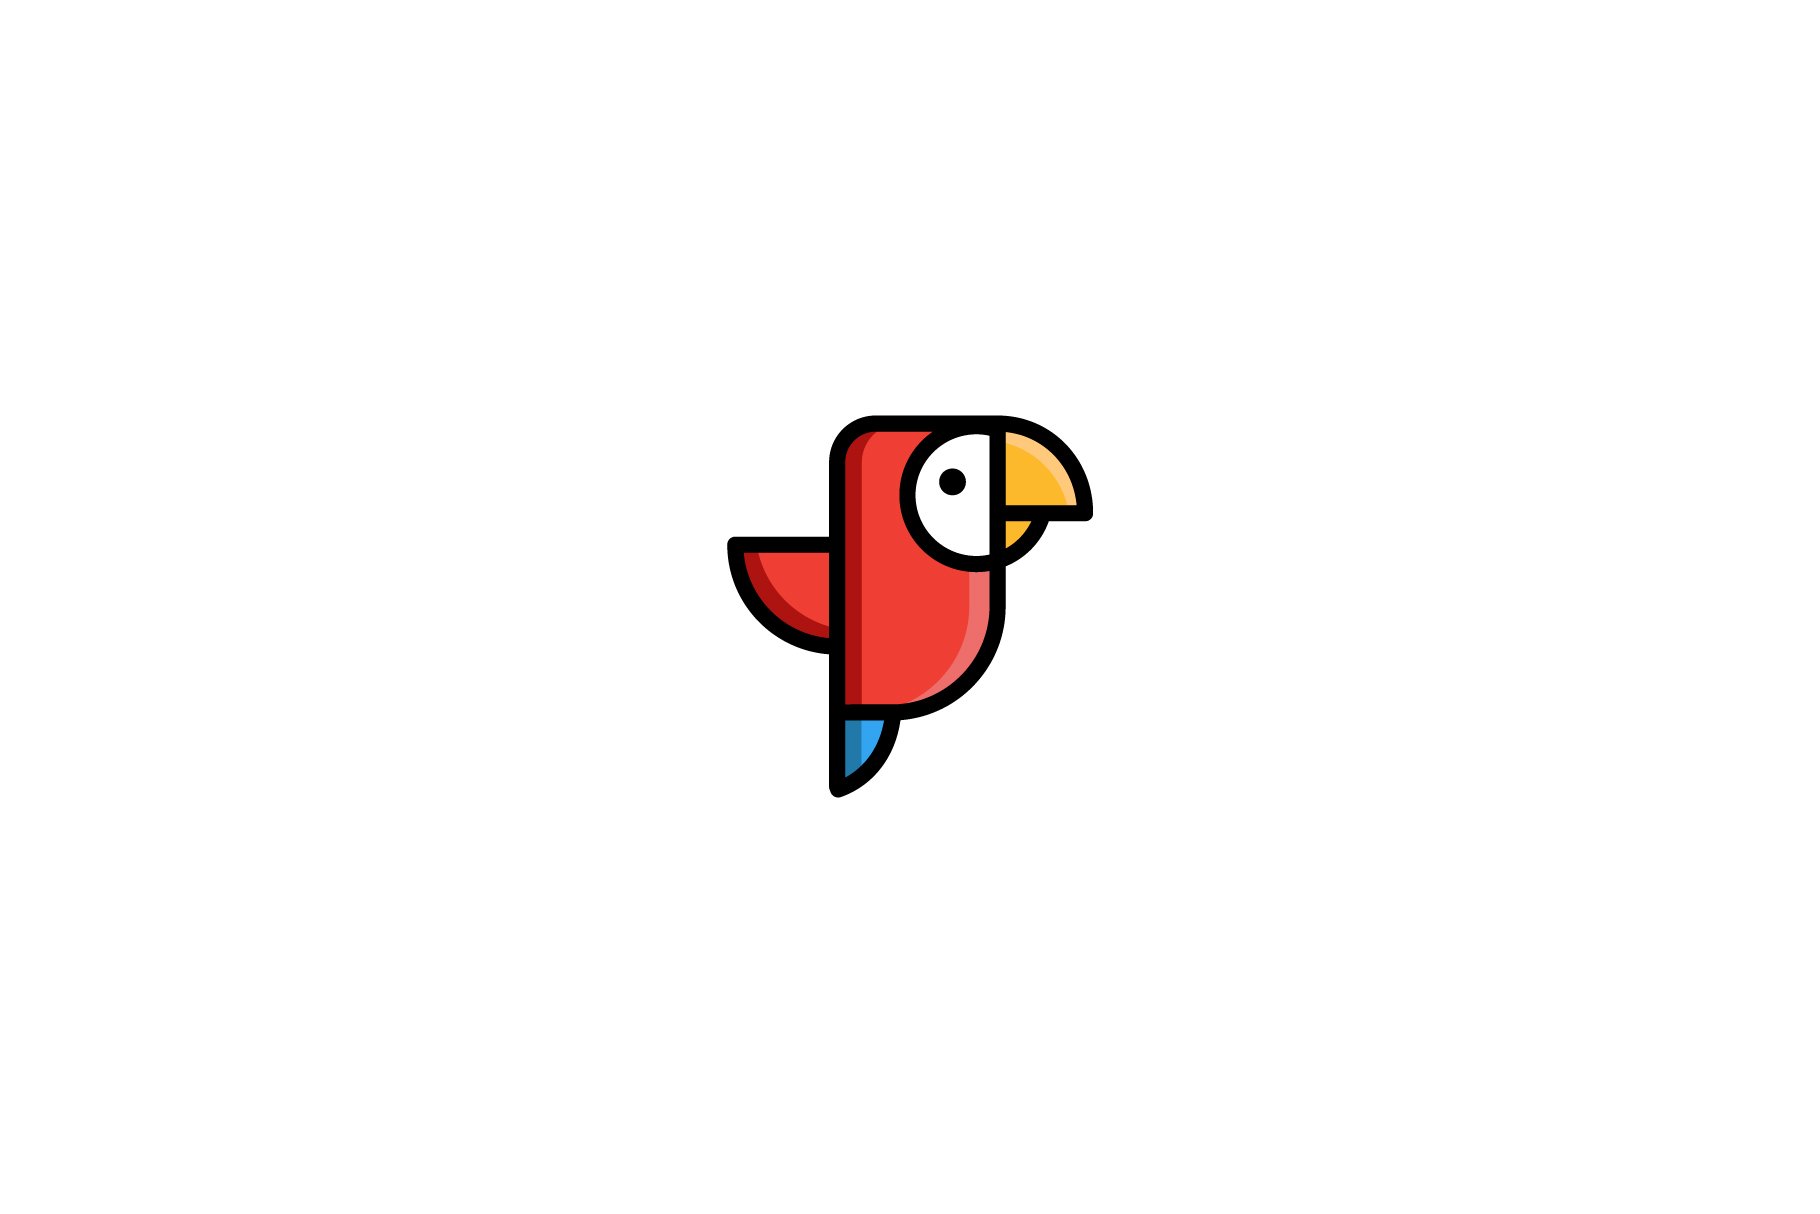 100,000 Parrot logo Vector Images | Depositphotos